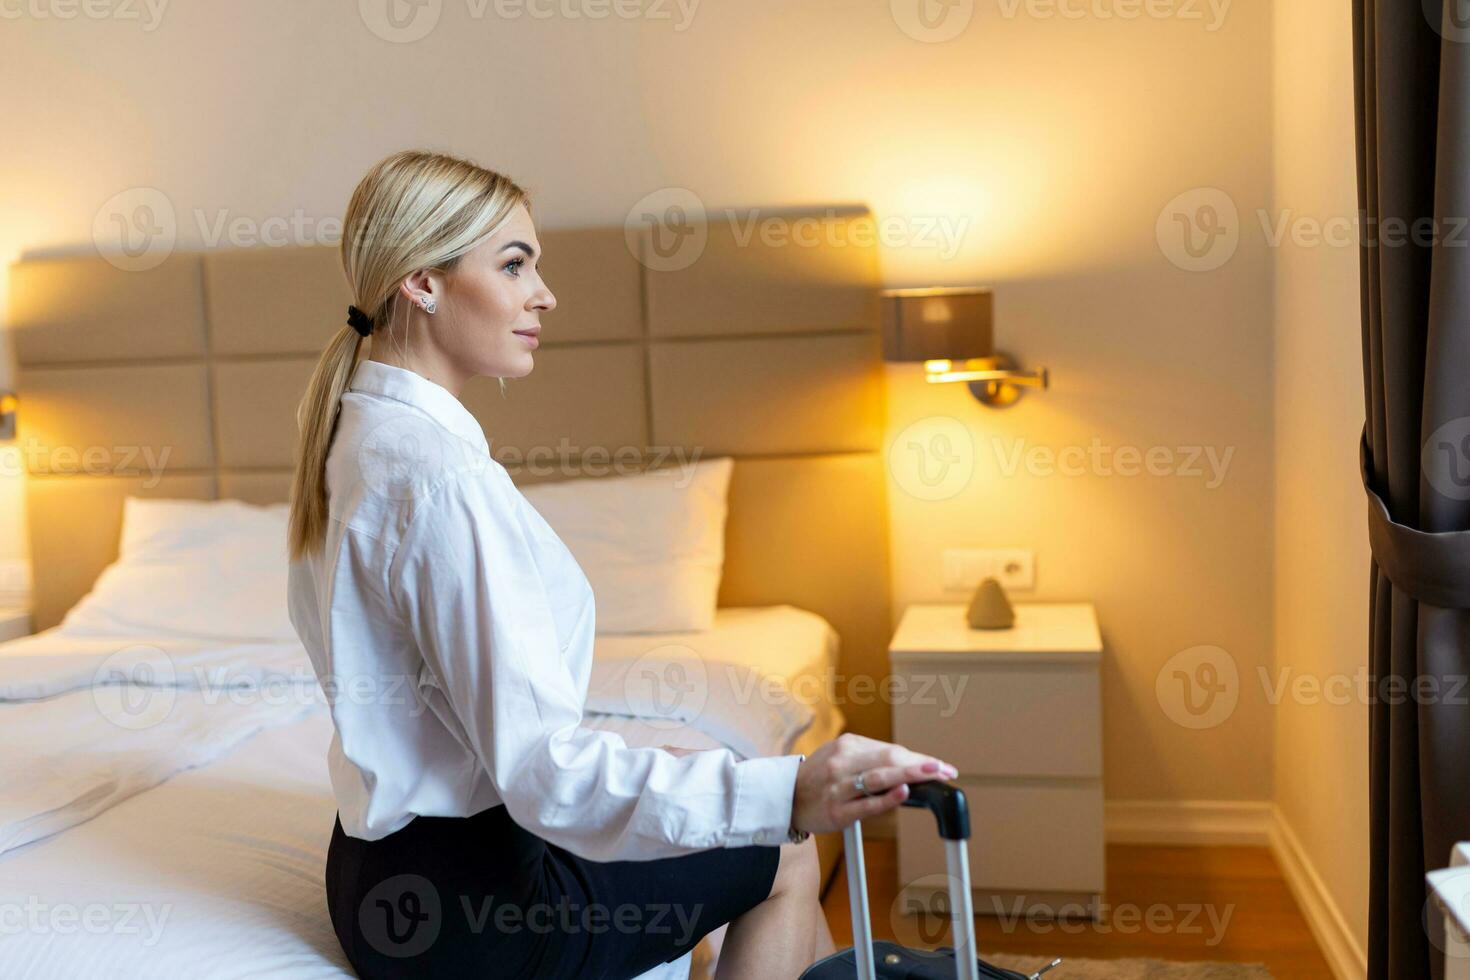 jong zakenvrouw zittend Aan bed Holding koffer in hotel kamer. bedrijf vrouw in pak met bagage in hotel kamer. bedrijf reis foto